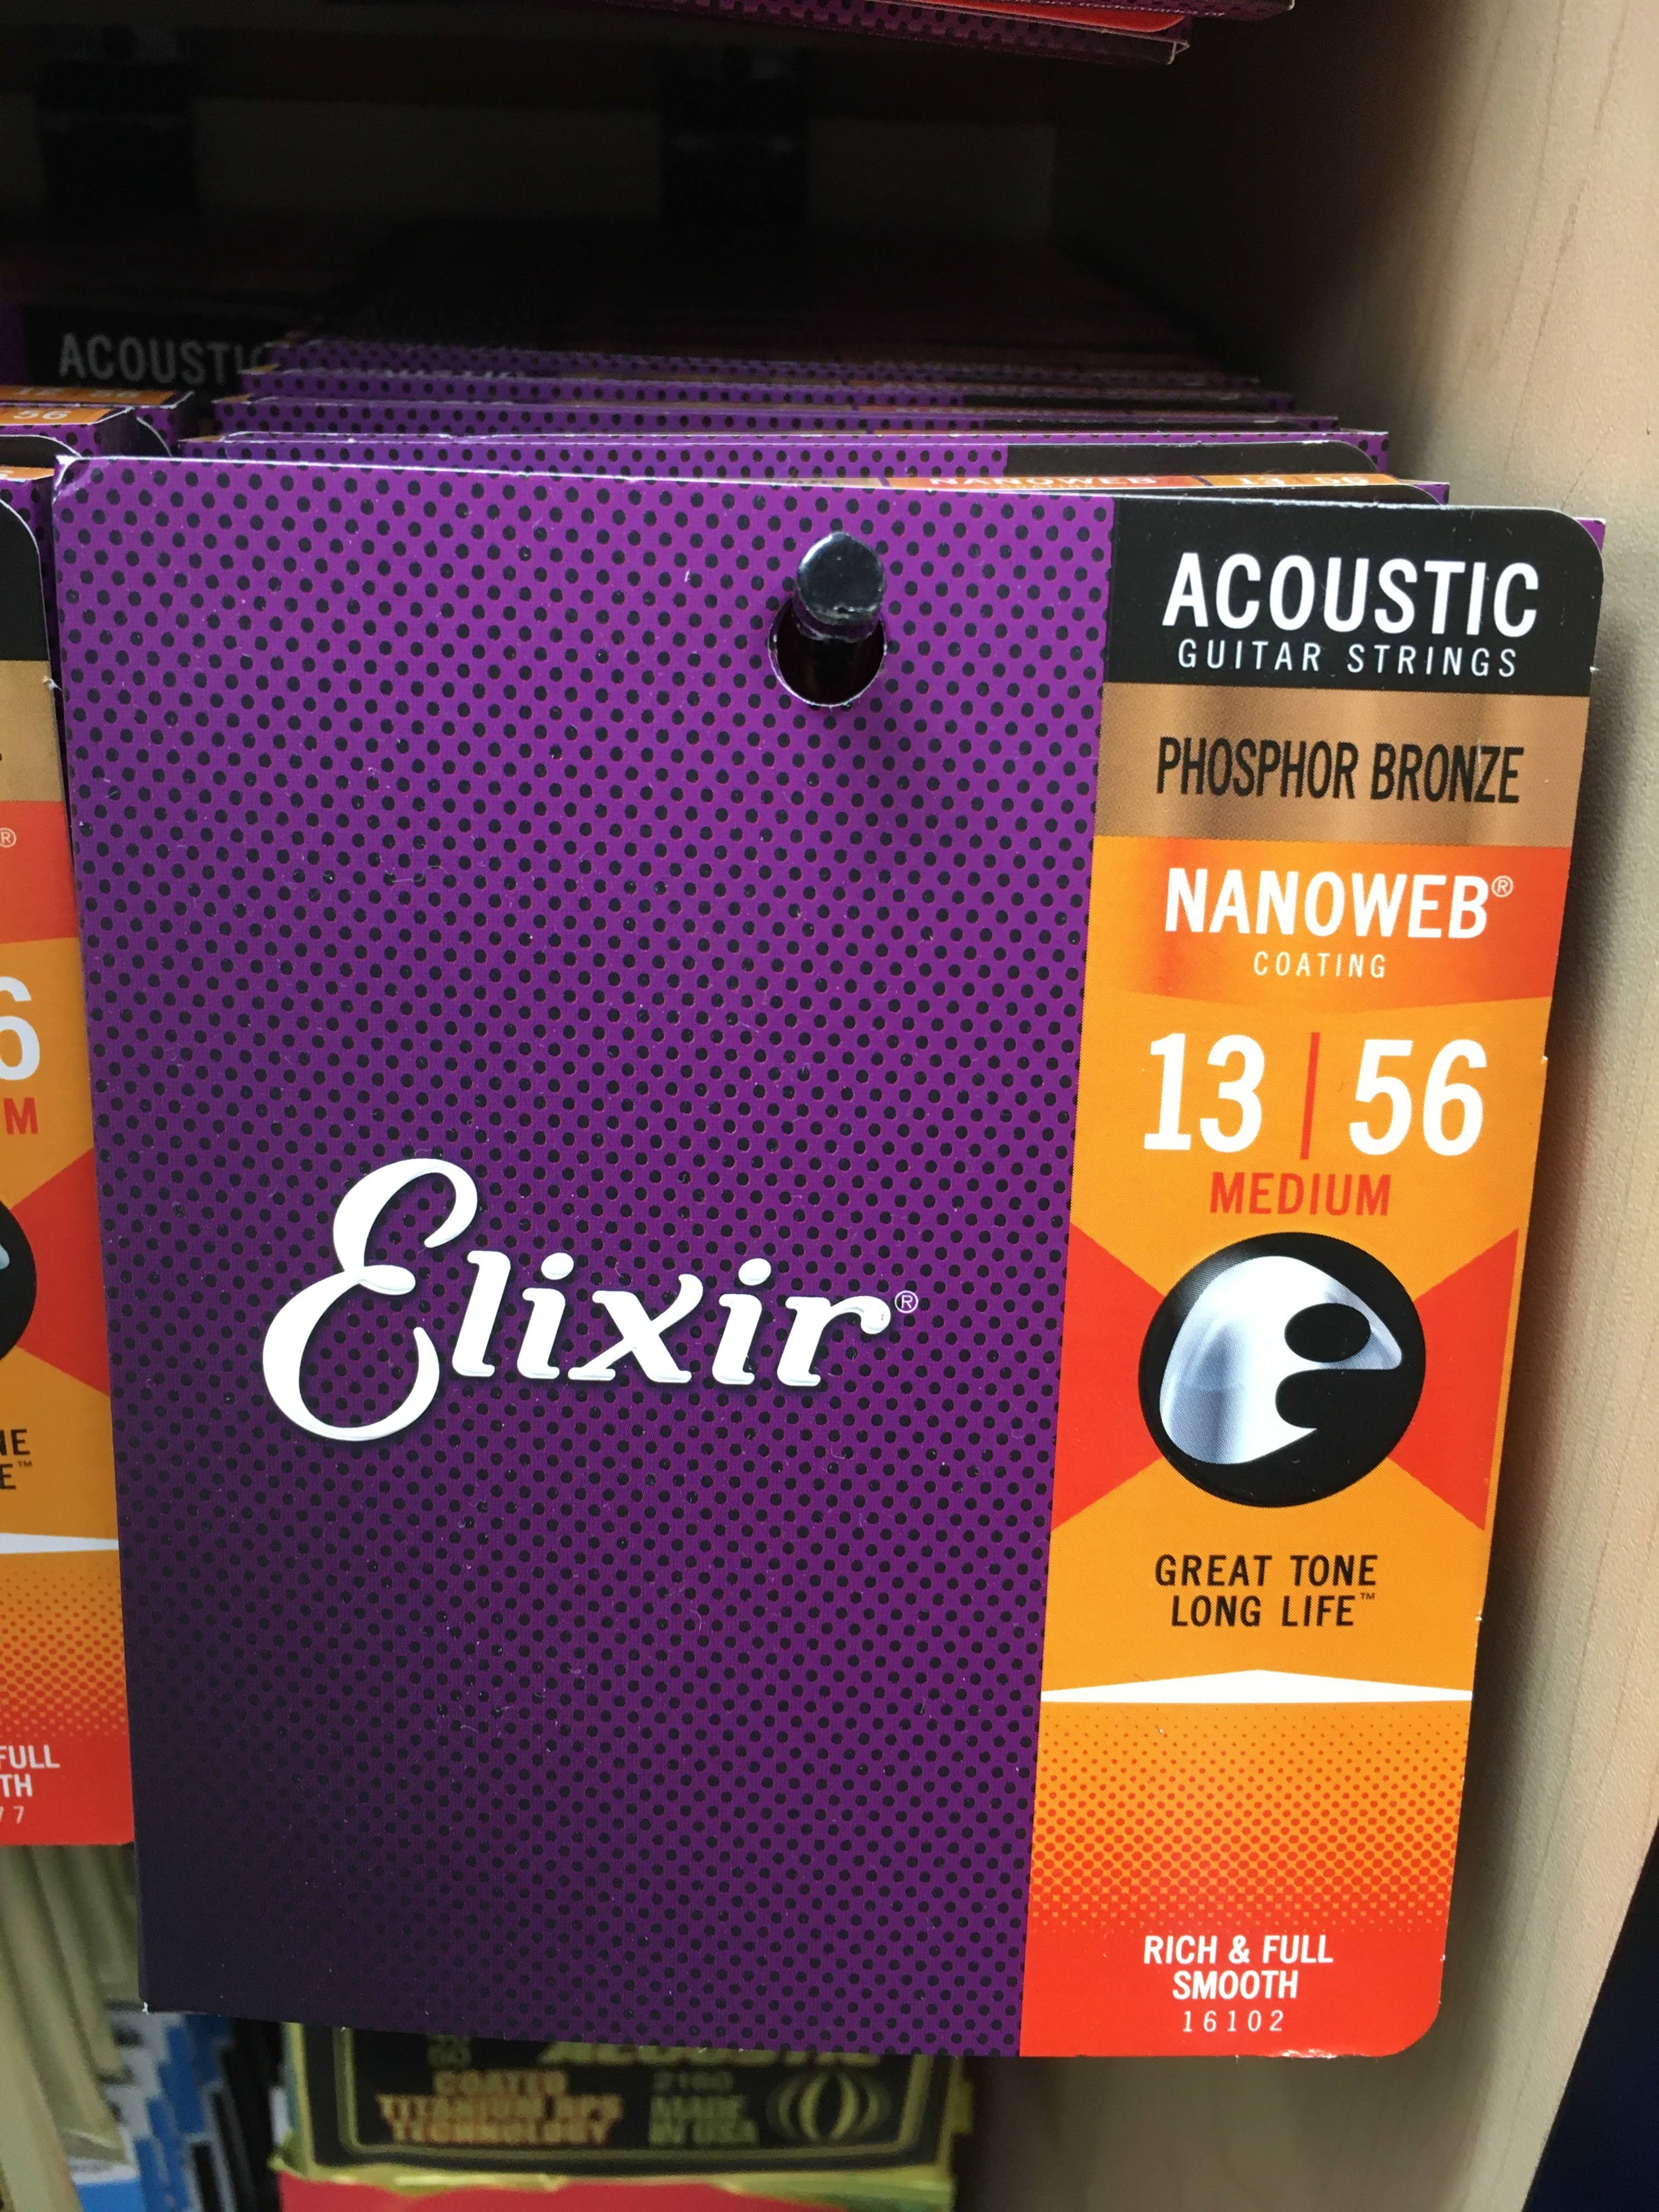 Elixir Acoustic Phosphor Bronze Guitar Strings with Nanoweb Coating - Medium